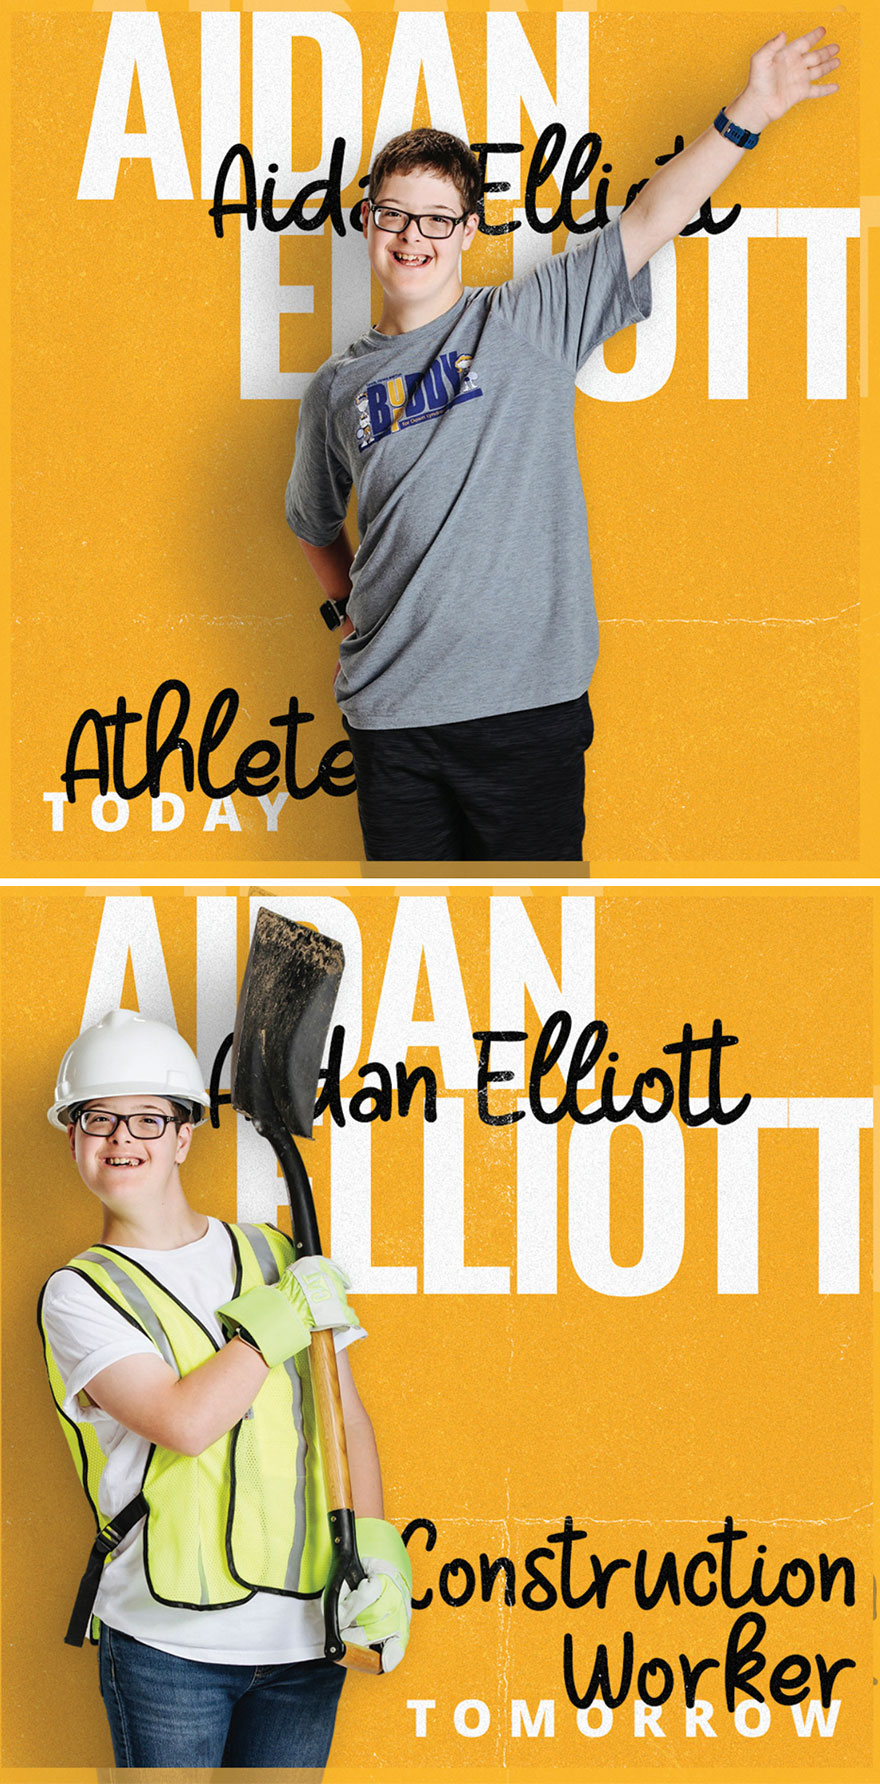 Aidan Elliott, Construction Worker